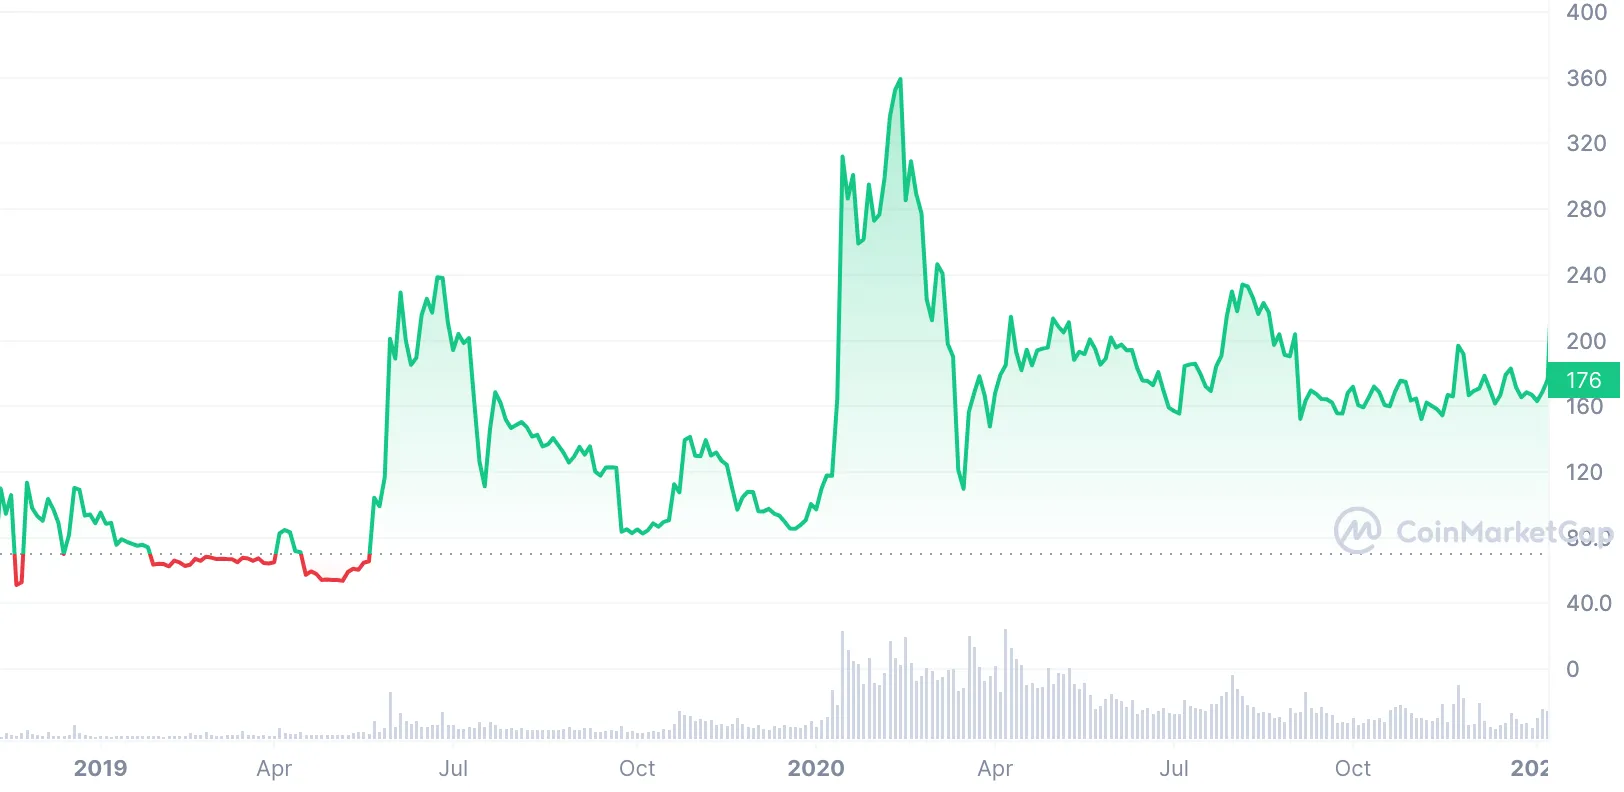 bitcoin sv price 2018-2020